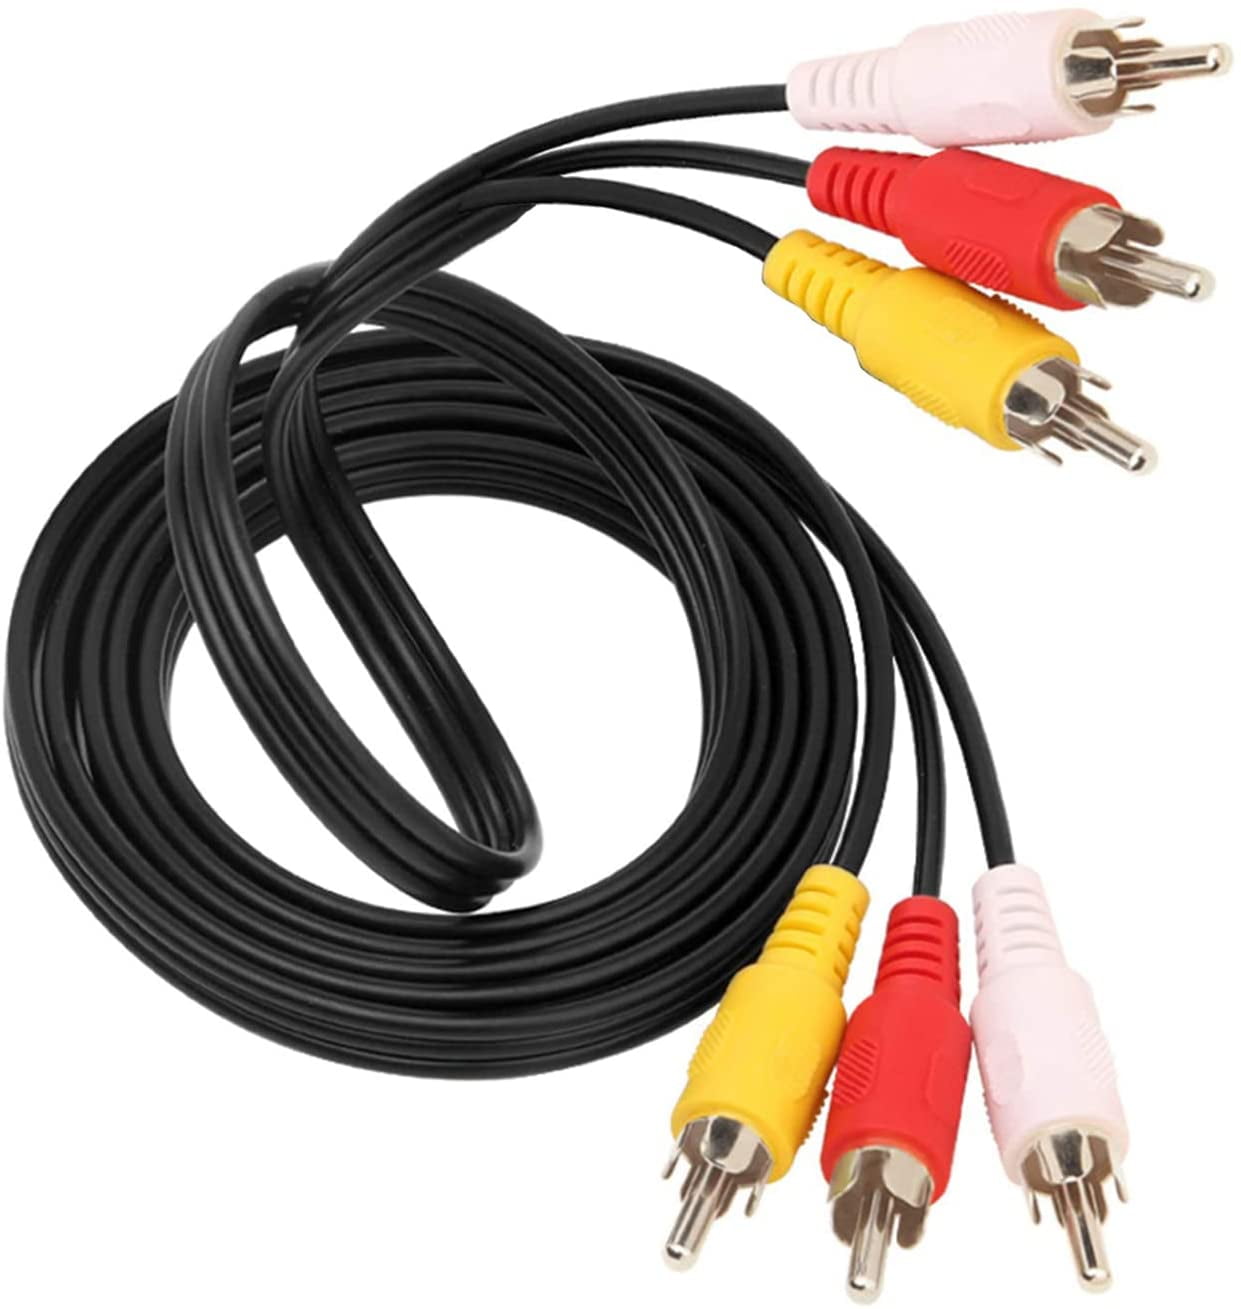 A/V 3 RCA Cable For Roku,2,LT,HD,2 XD,2XS,HDTV Digital Media Streamer Plaryer 